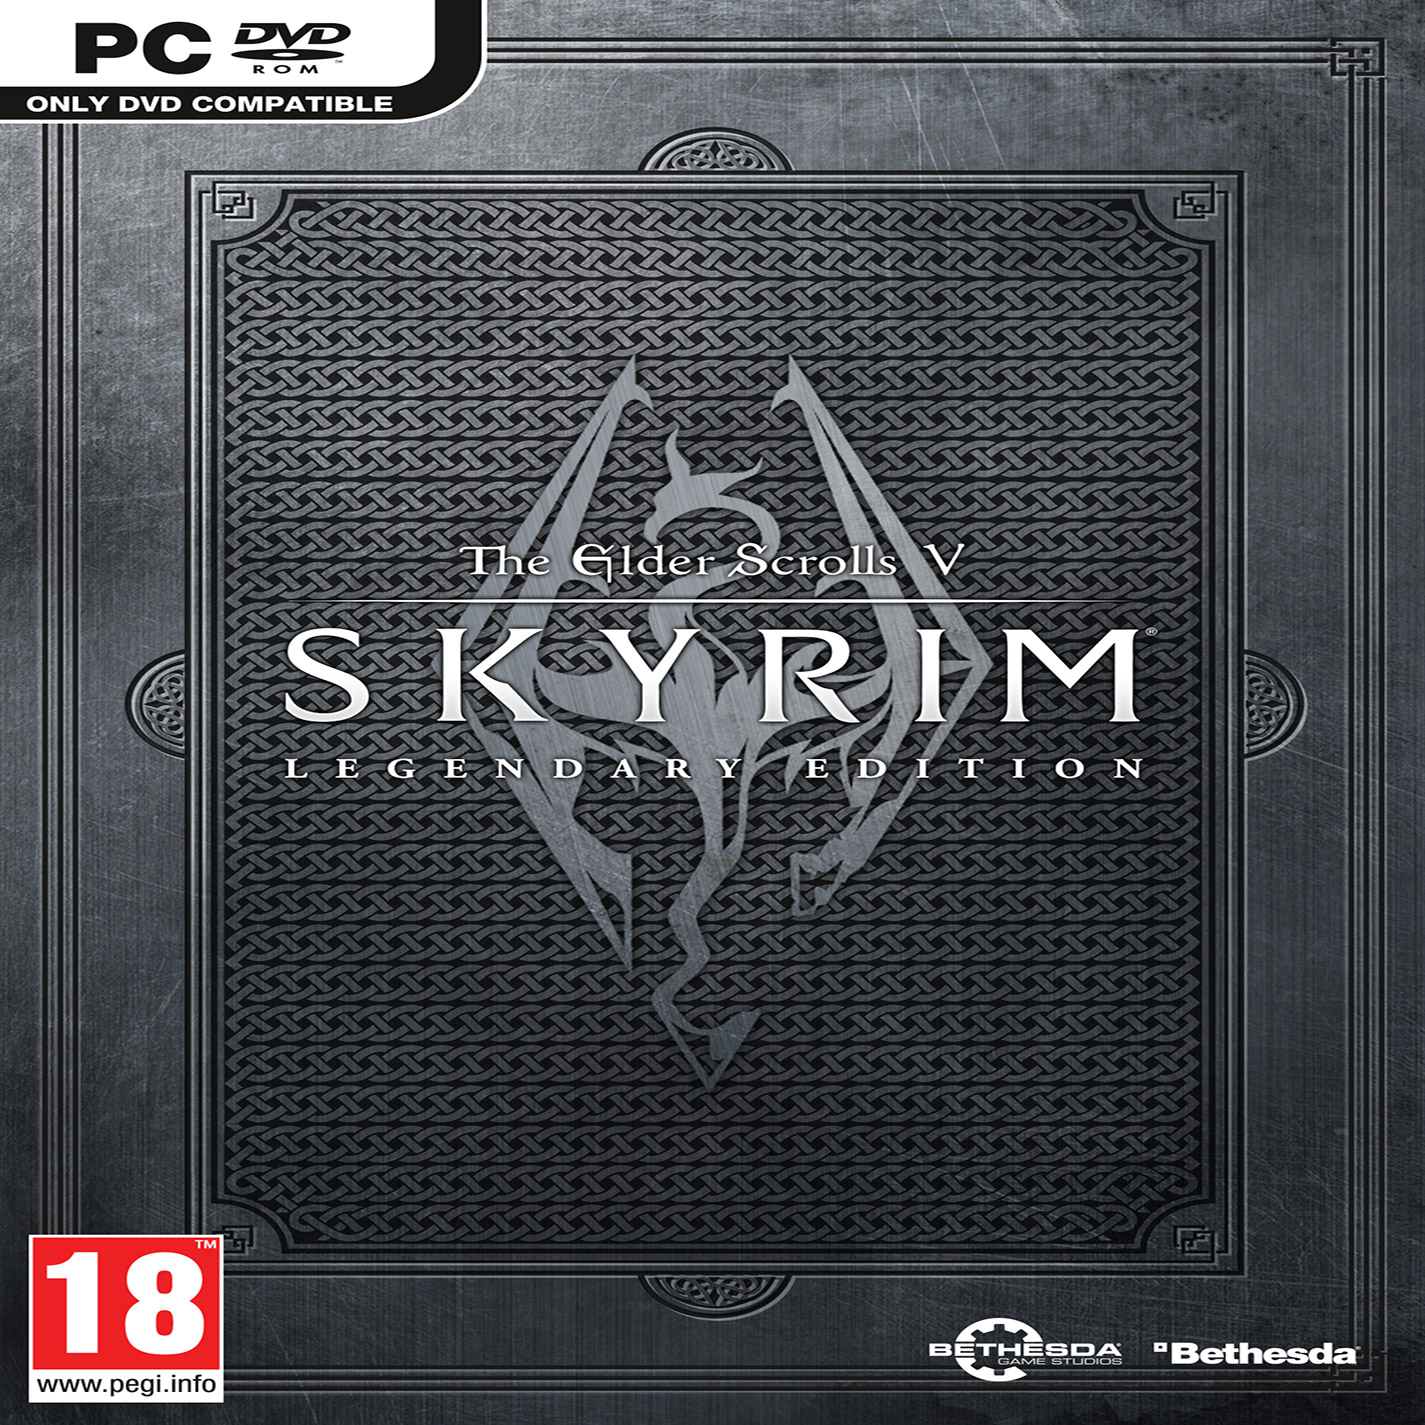 The Elder Scrolls V: Skyrim - Legendary Edition - pedn CD obal